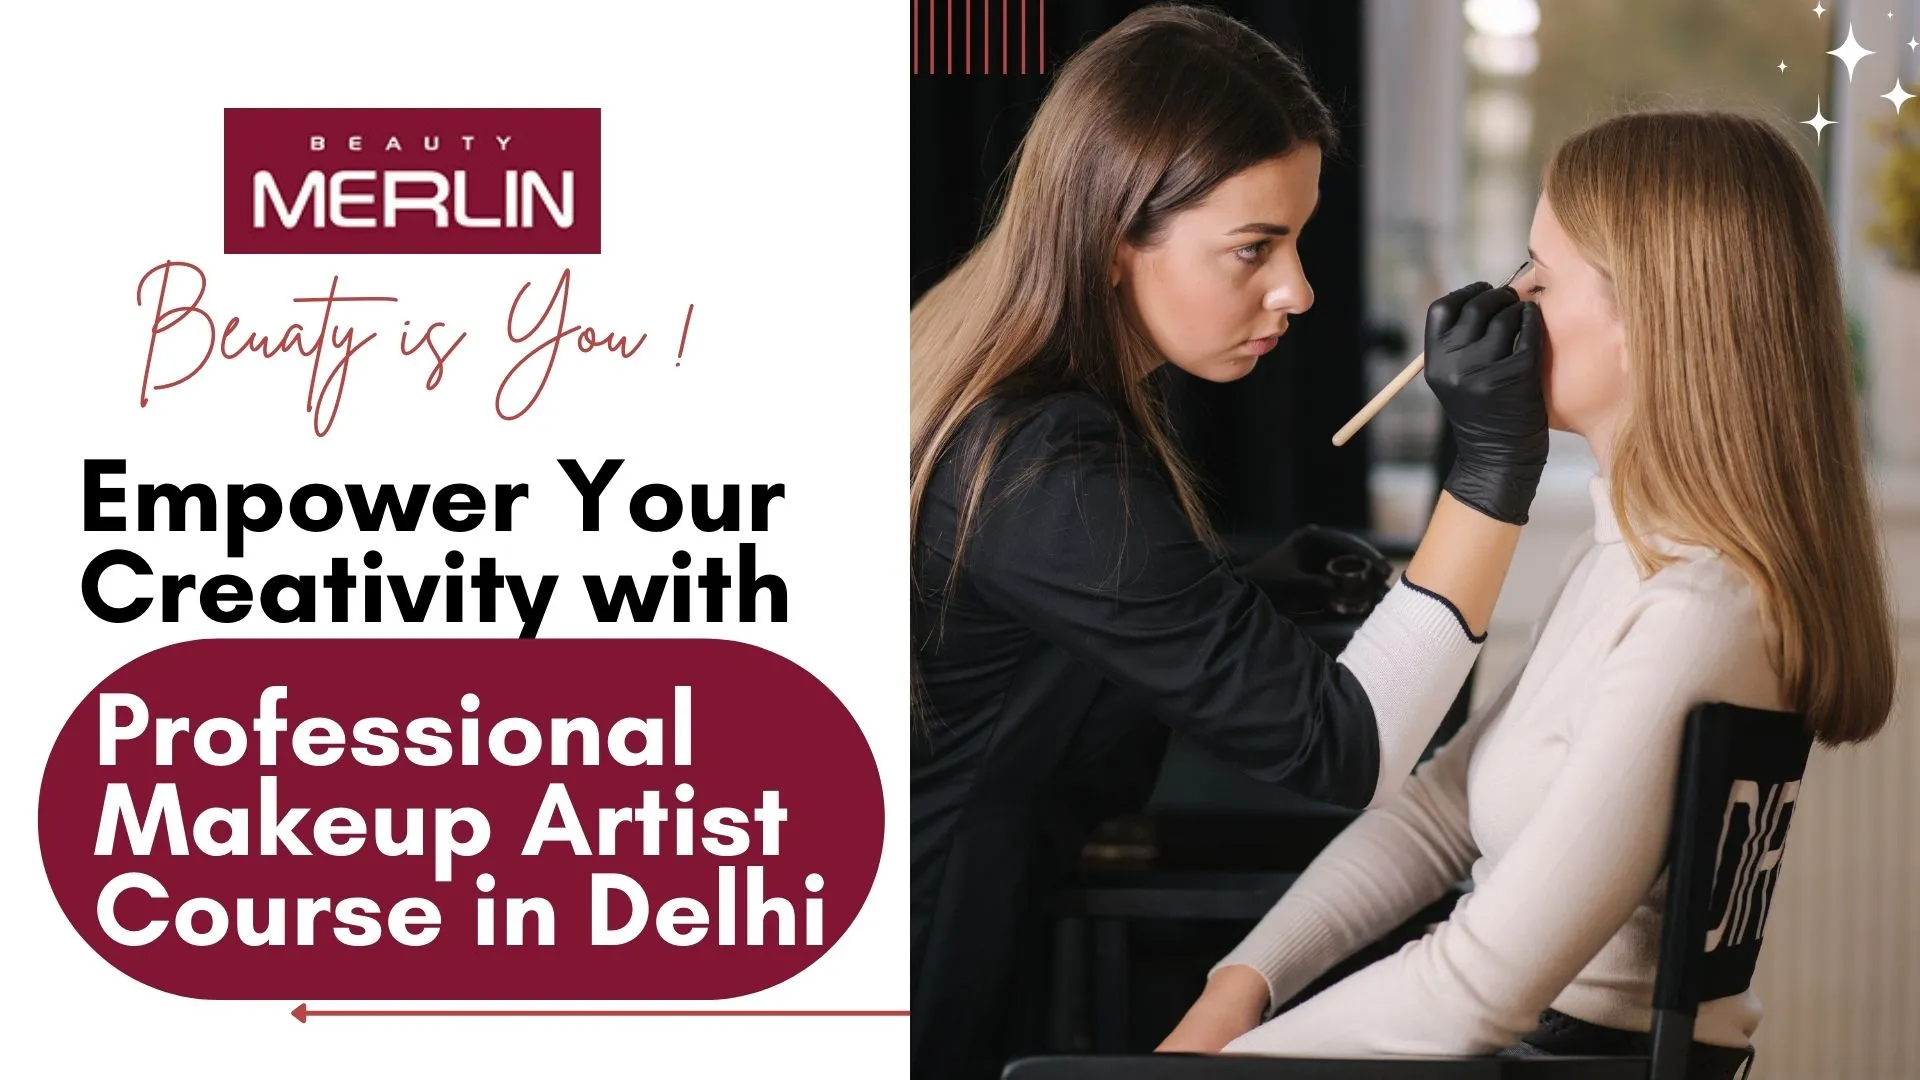 Makeup Artist Course in Delhi